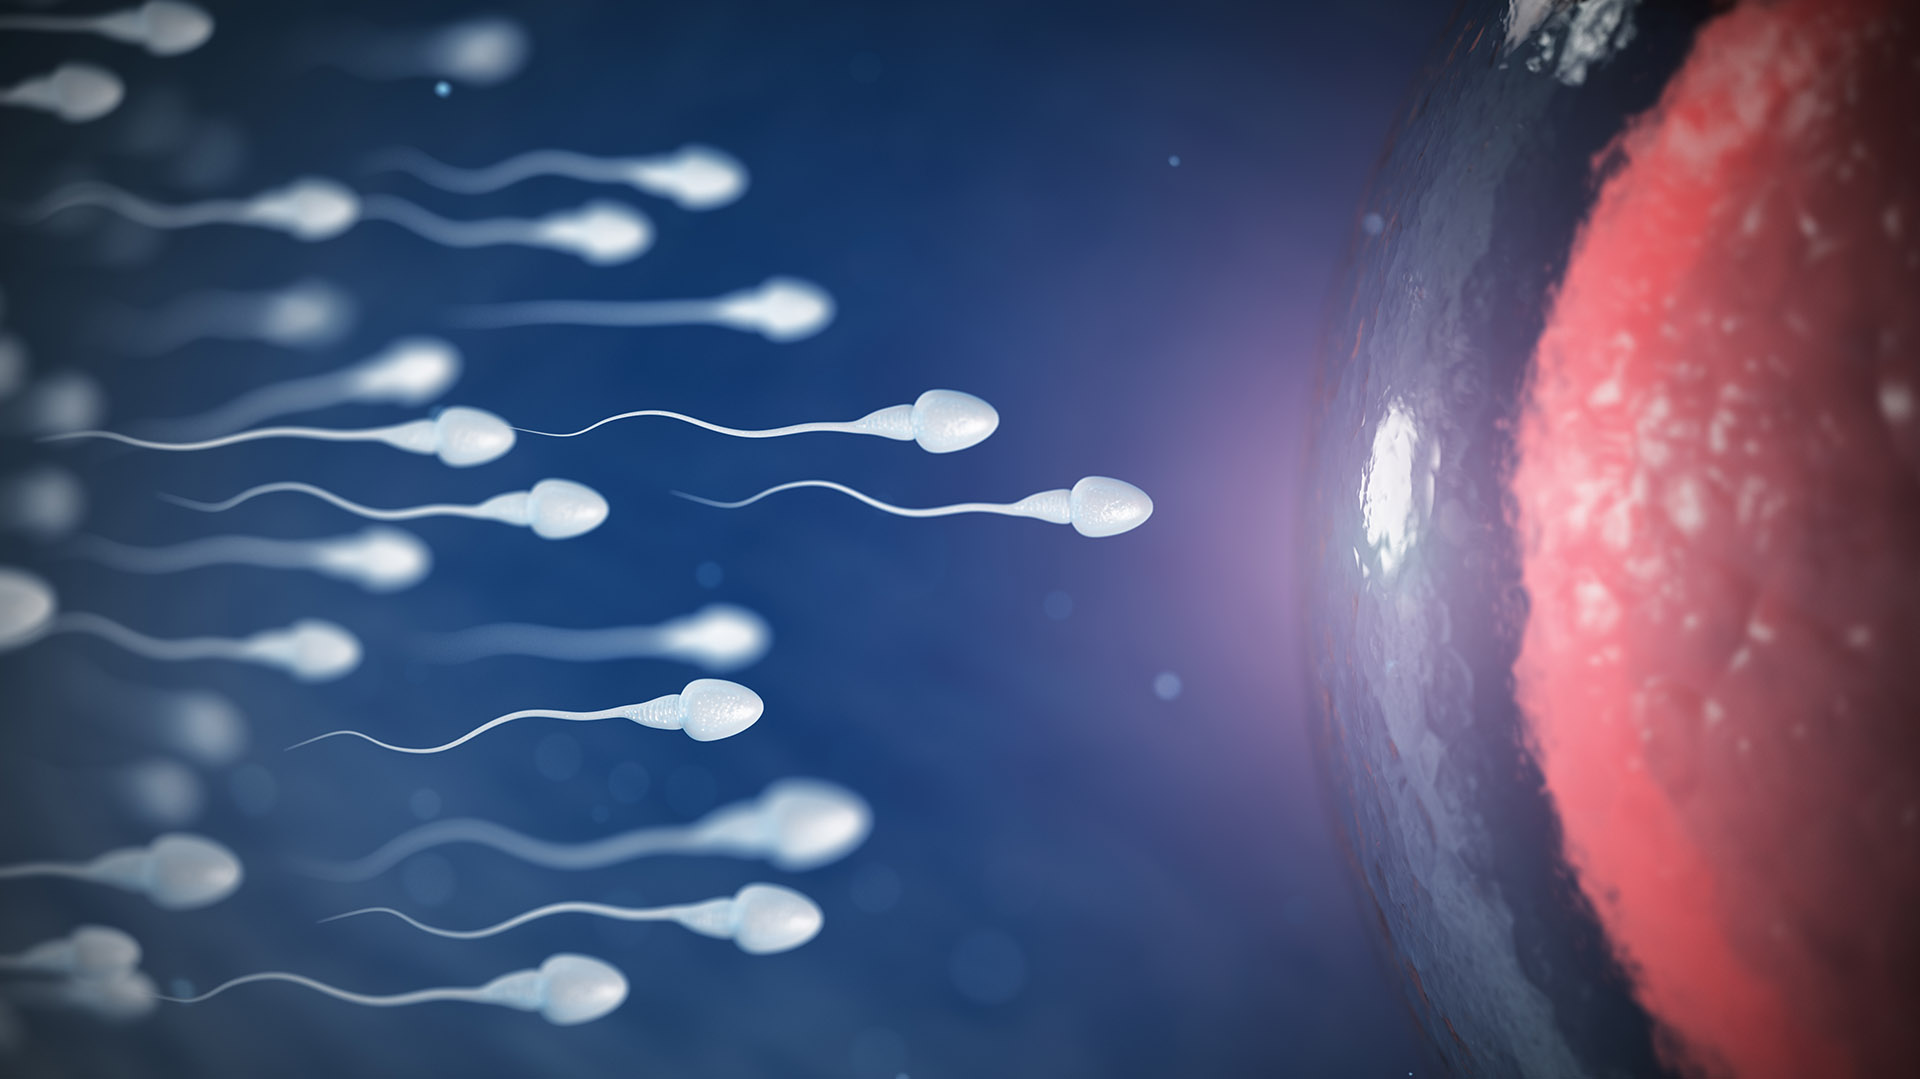 Espermatozoides fecundando un óvulo. (Shutterstock.com)